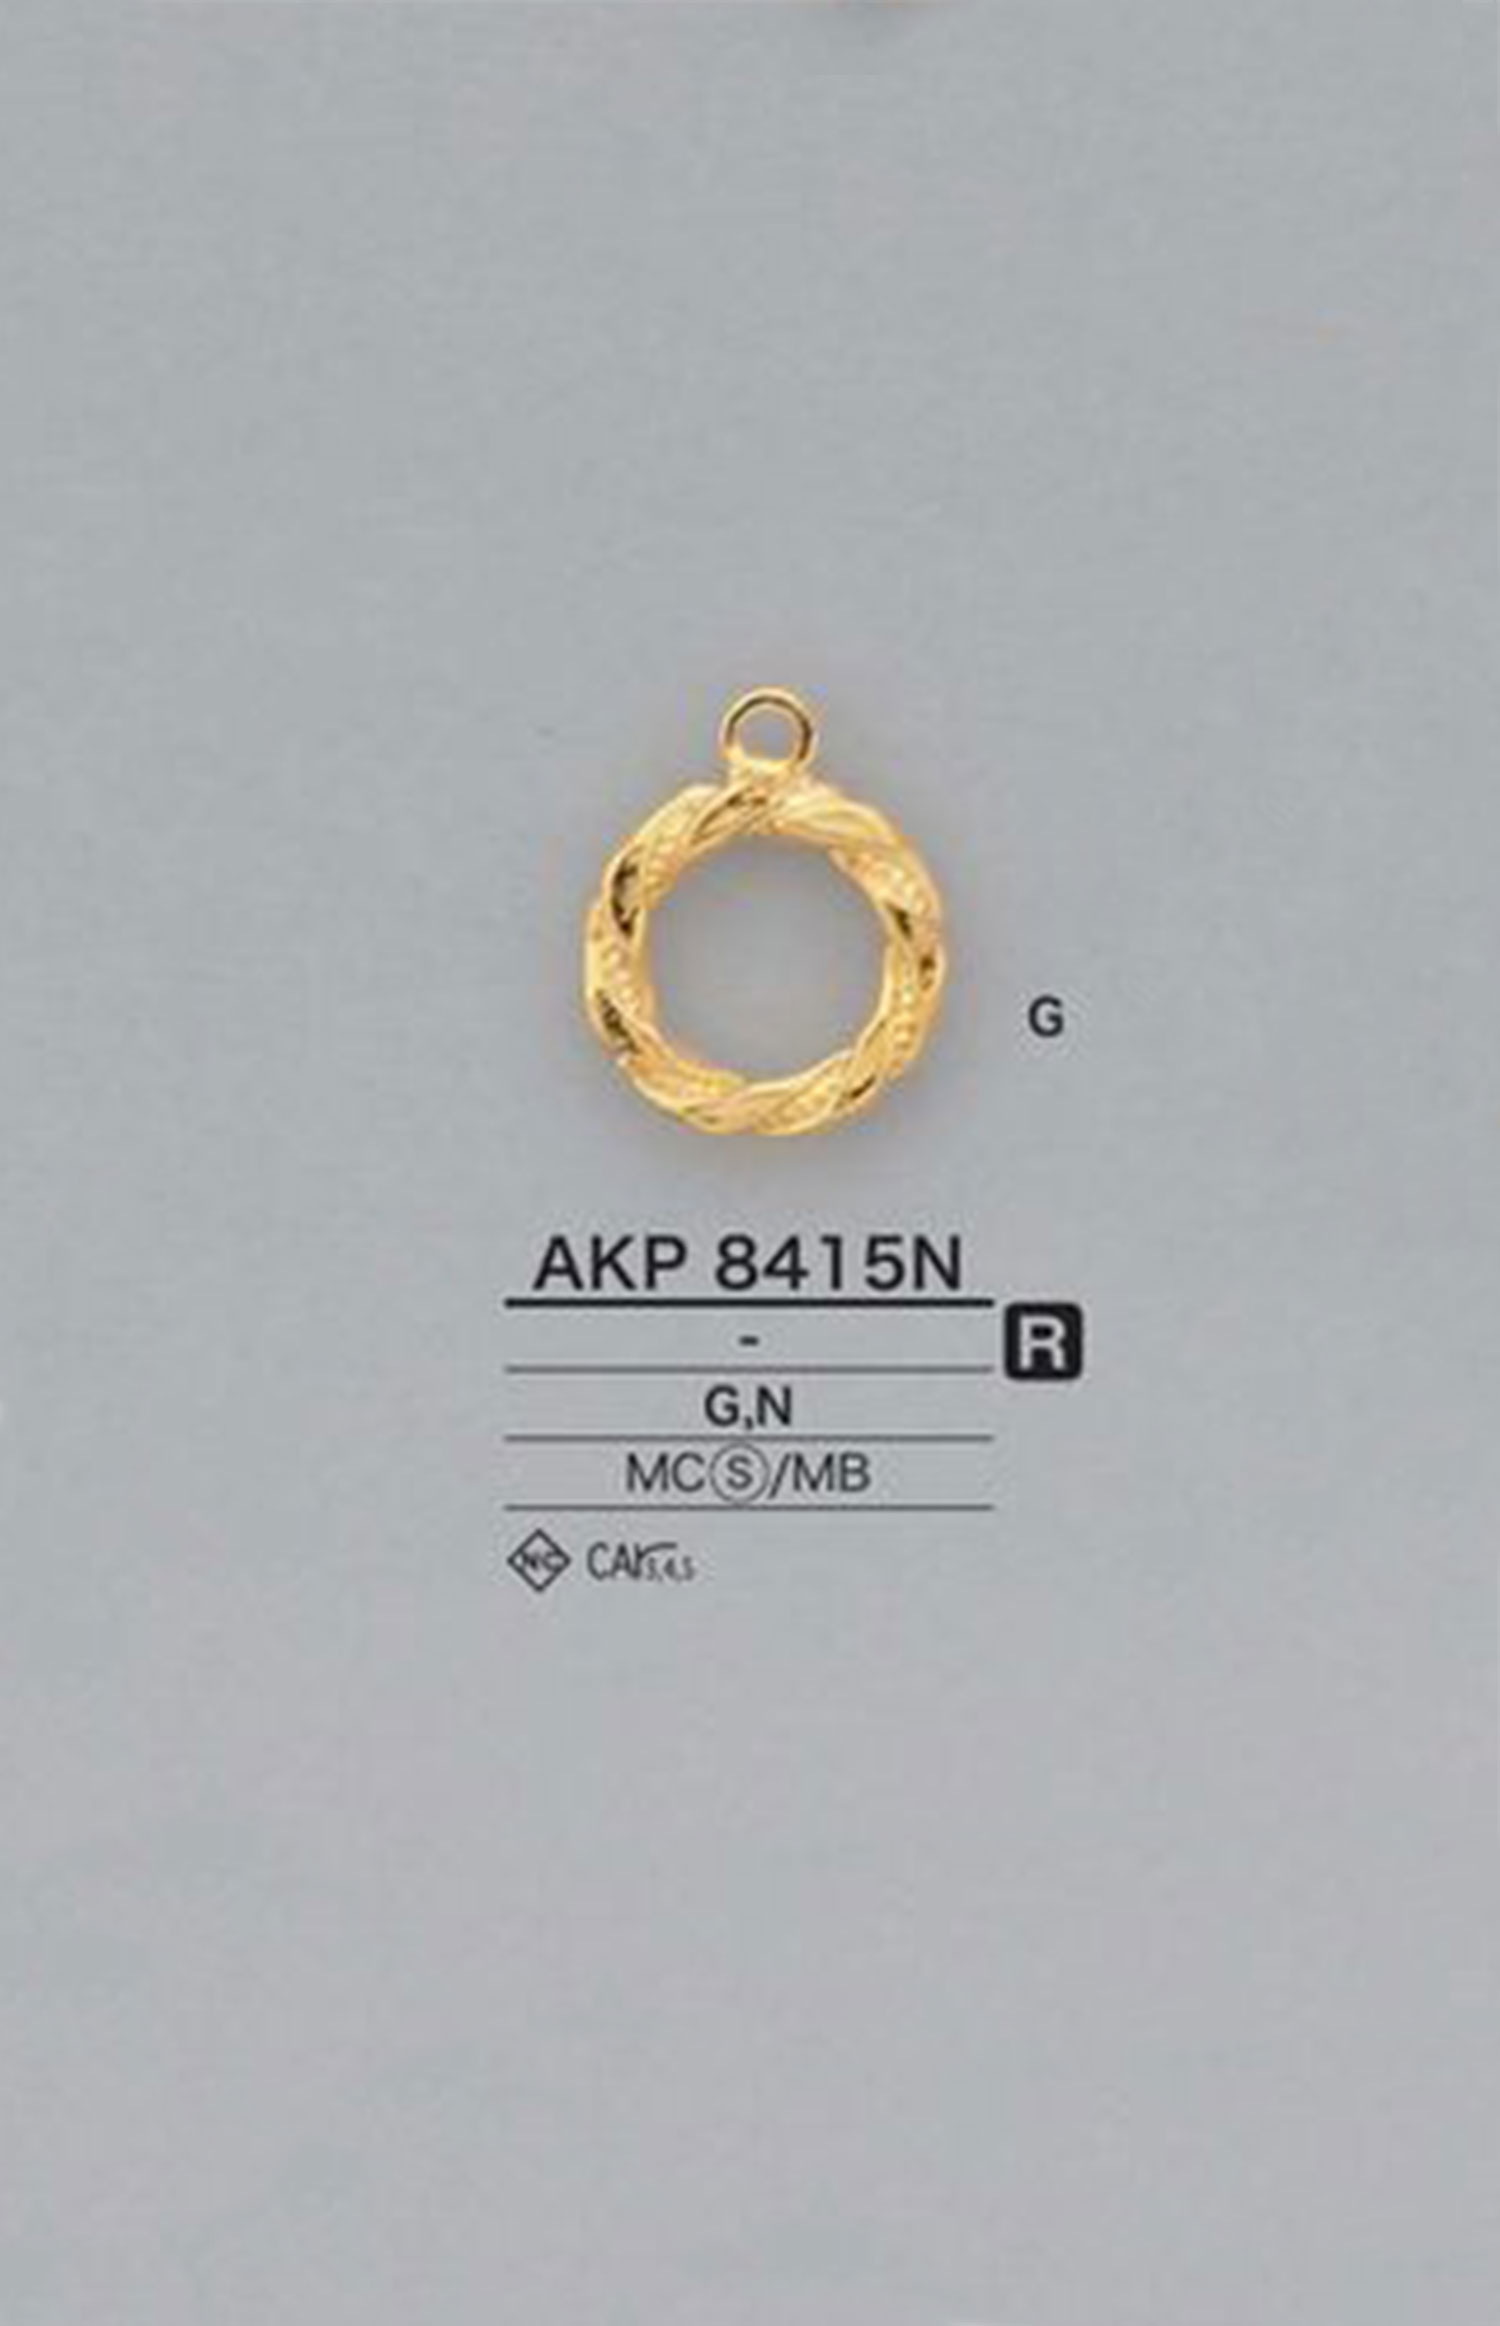 AKP8415N Ringreißverschlusspunkt (Zuglasche)[Reißverschluss] IRIS